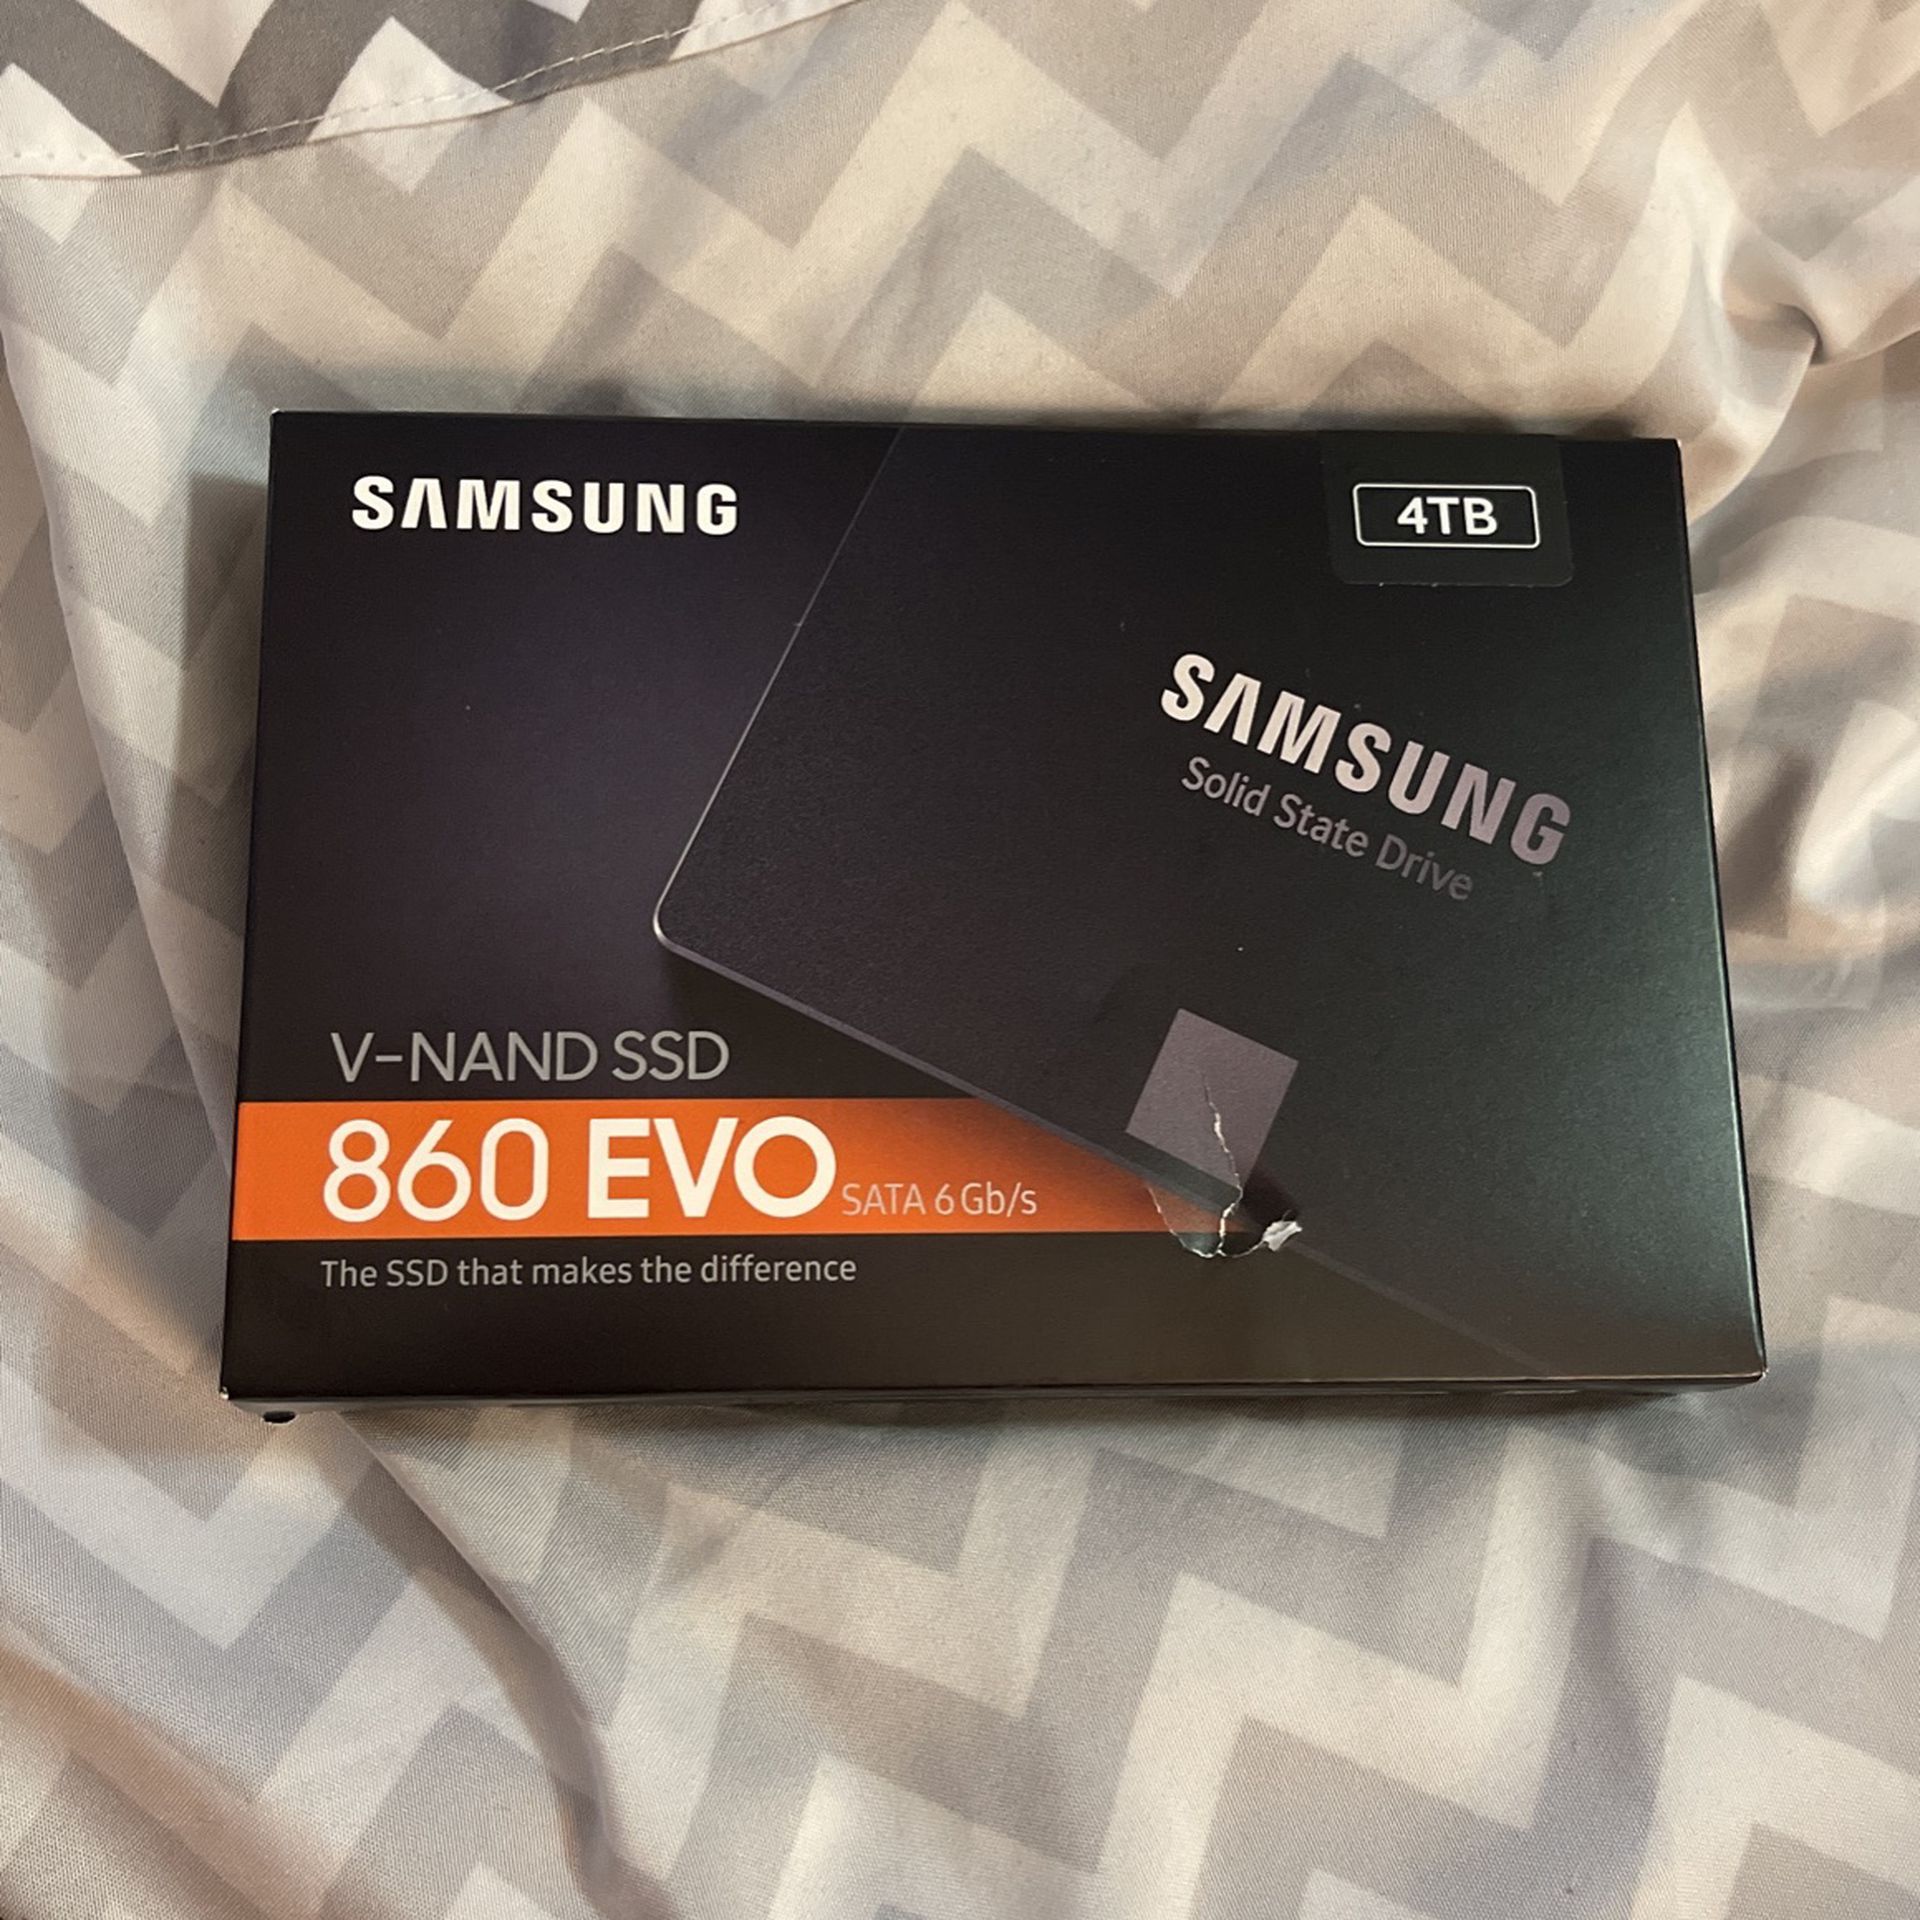 Samsung SSD 860 Evo SATA 6Gb/s